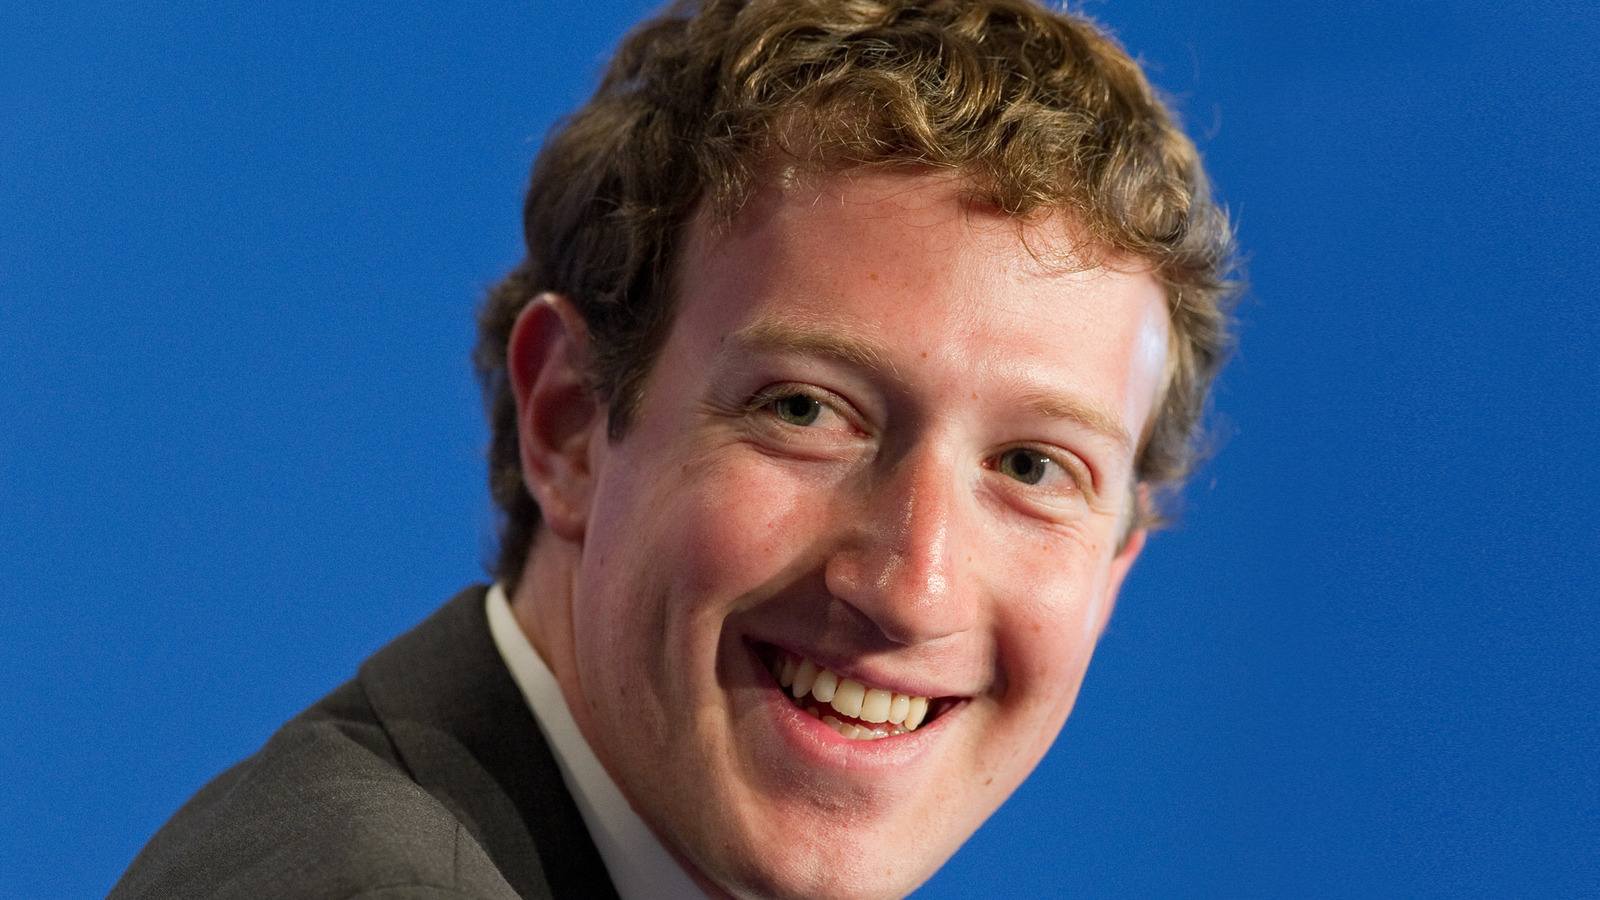 Here's What Mark Zuckerberg's Net Worth Really Is